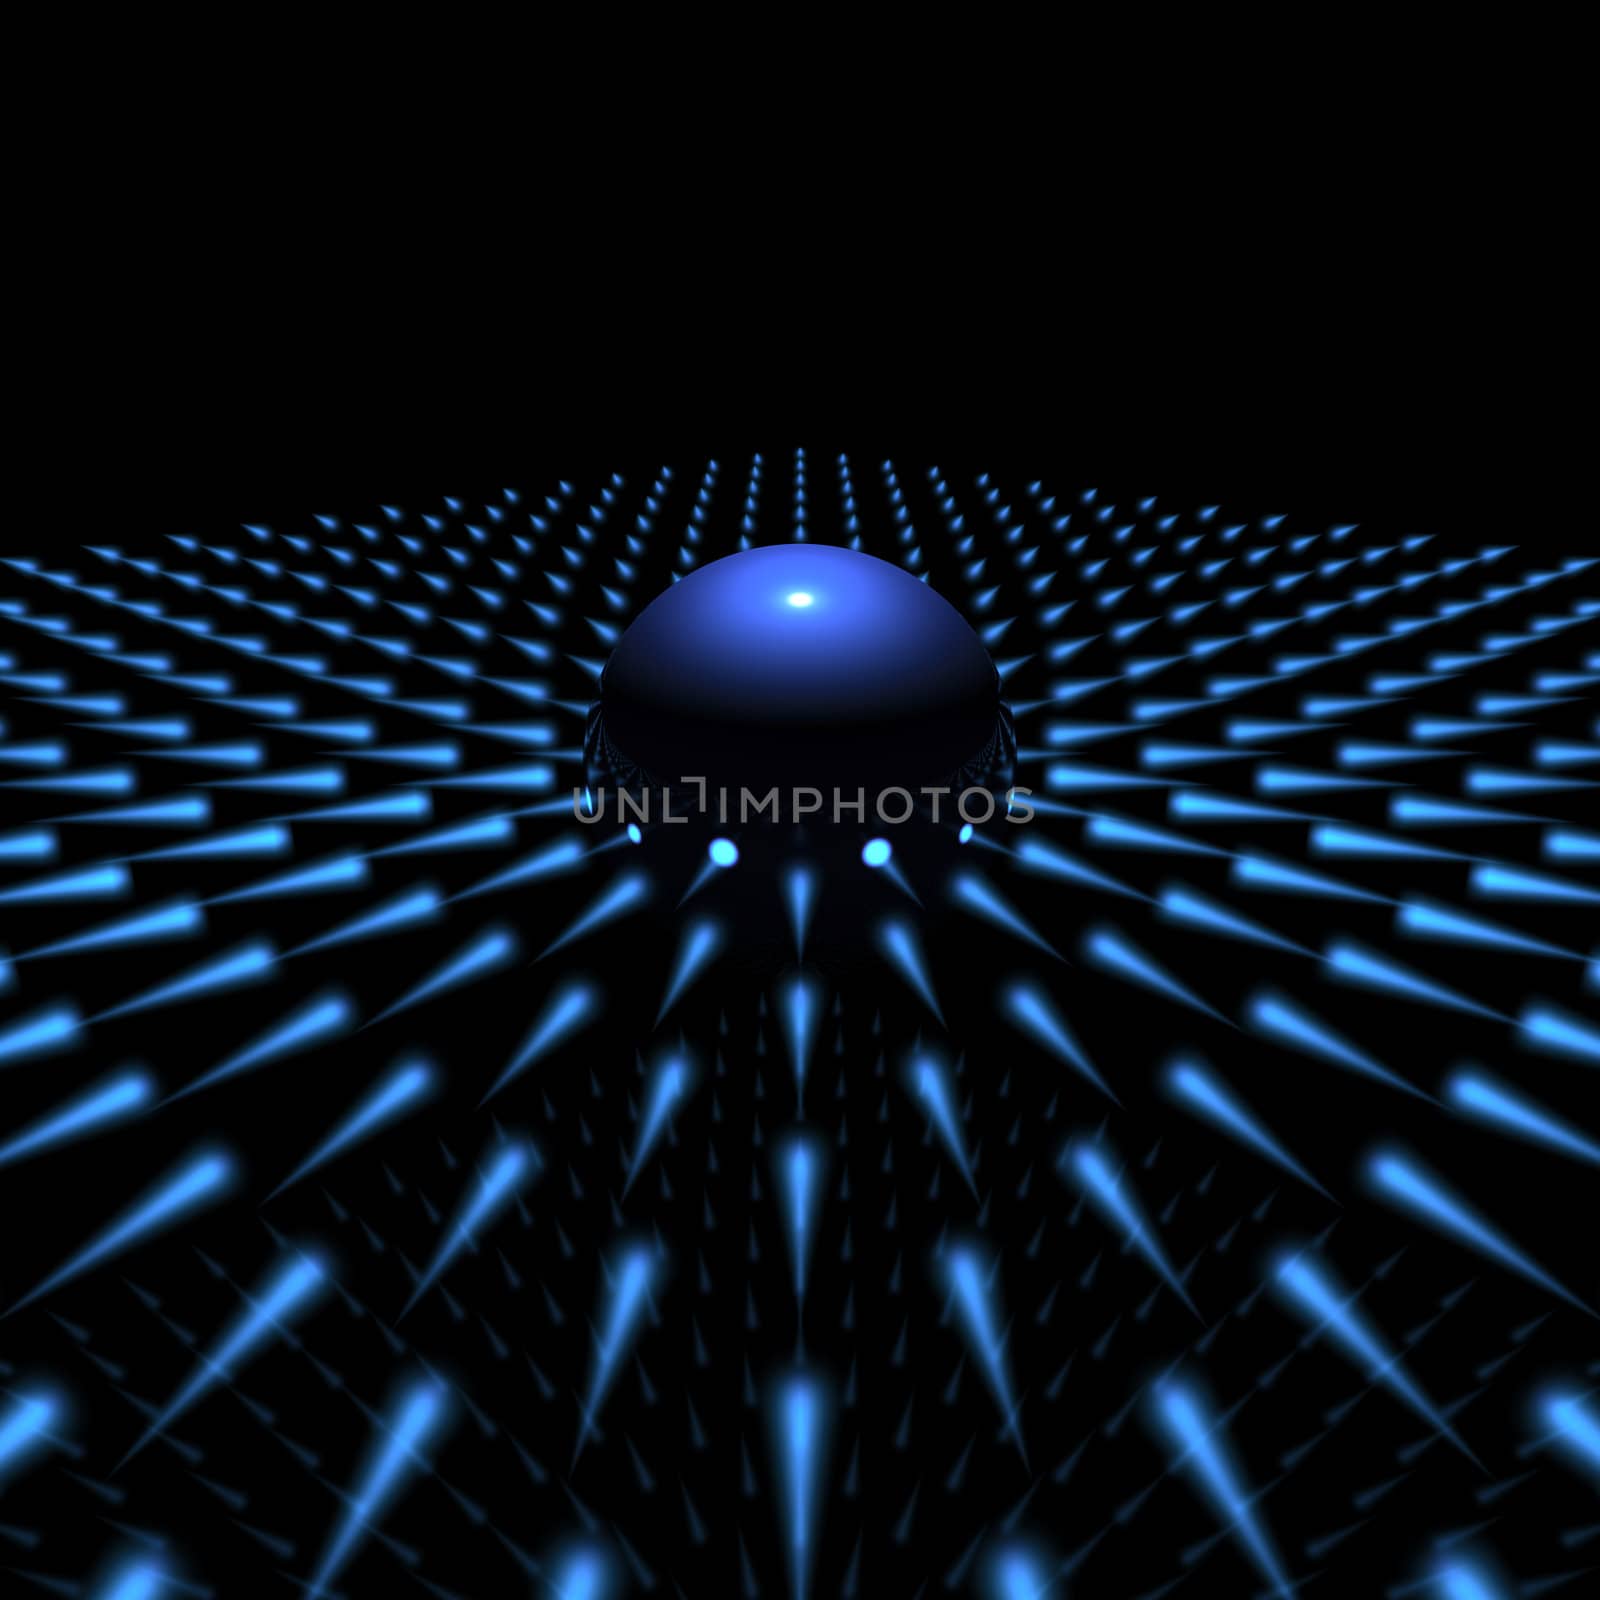 Abstract demonstration - blue light sphere